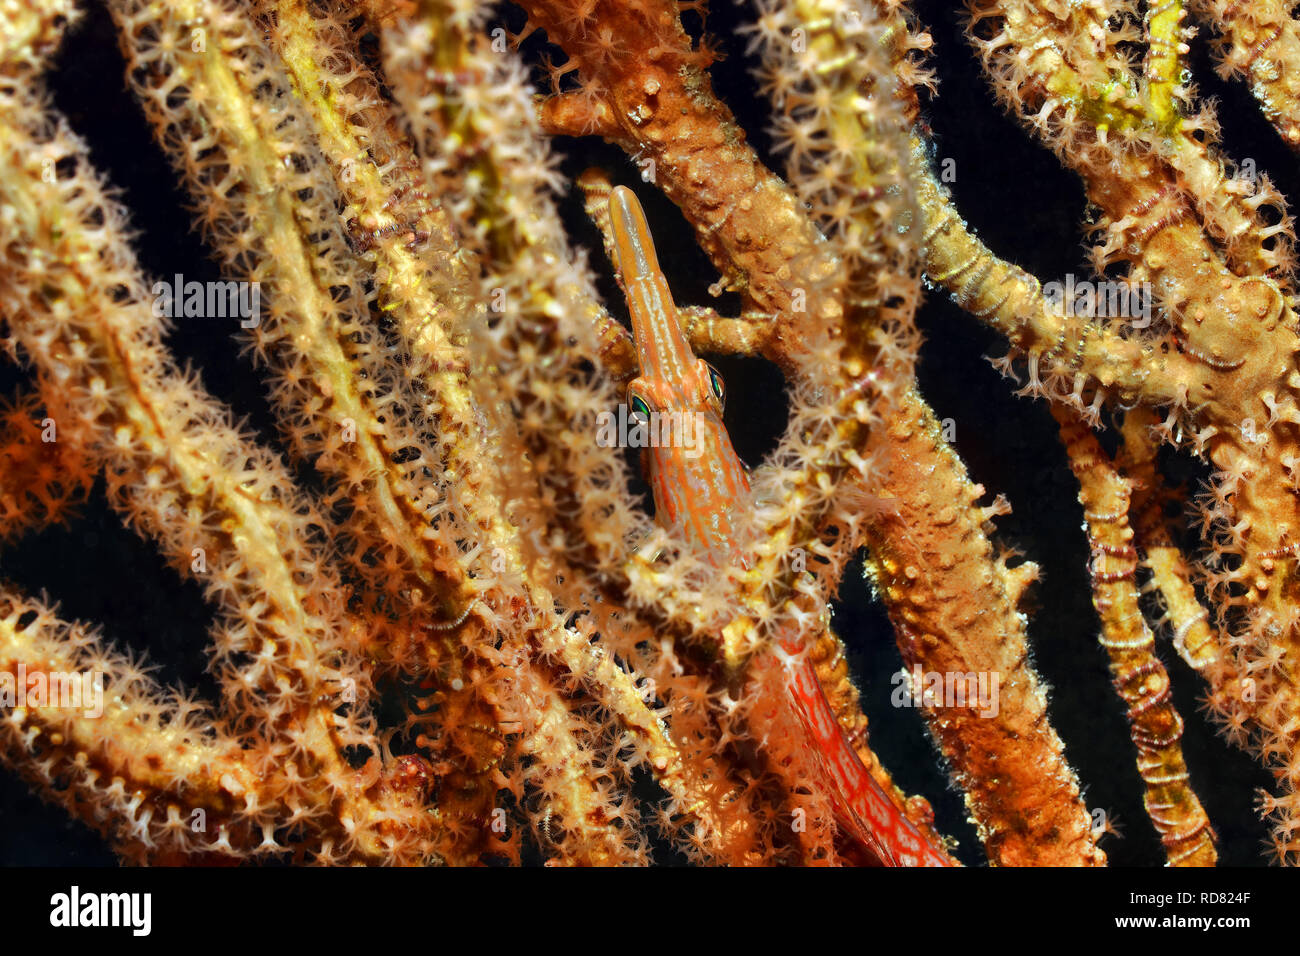 Longnose hawkfish - Oxycirrhites typus Stock Photo